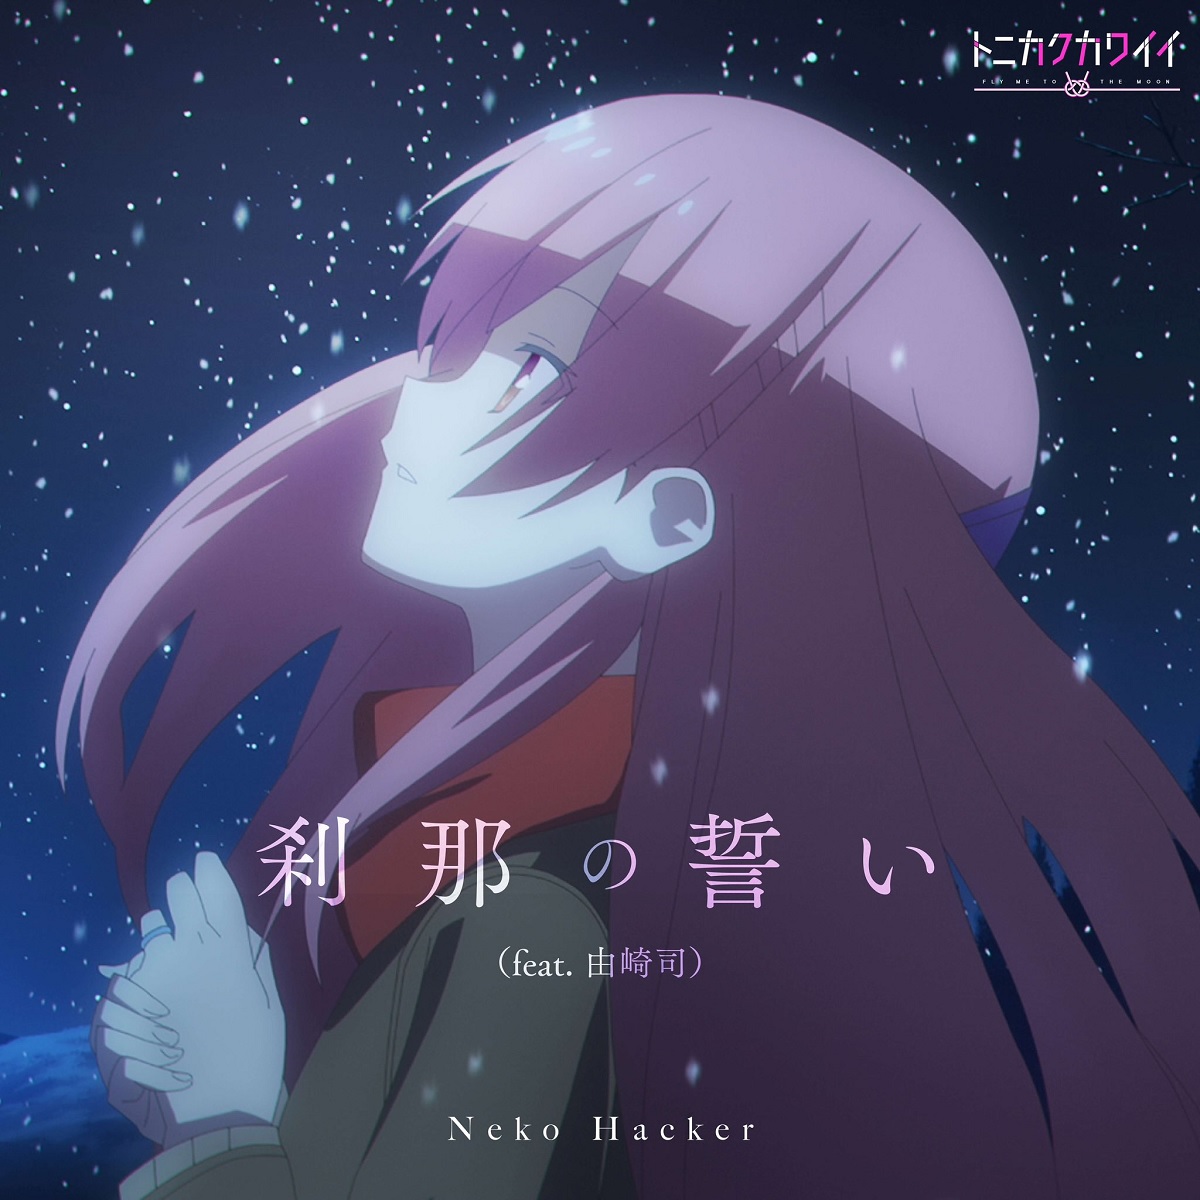 Cover art for『Neko Hacker - 刹那の誓い (feat. 由崎司)』from the release『Setsuna no Chikai (feat. Tsukasa Yuzaki)